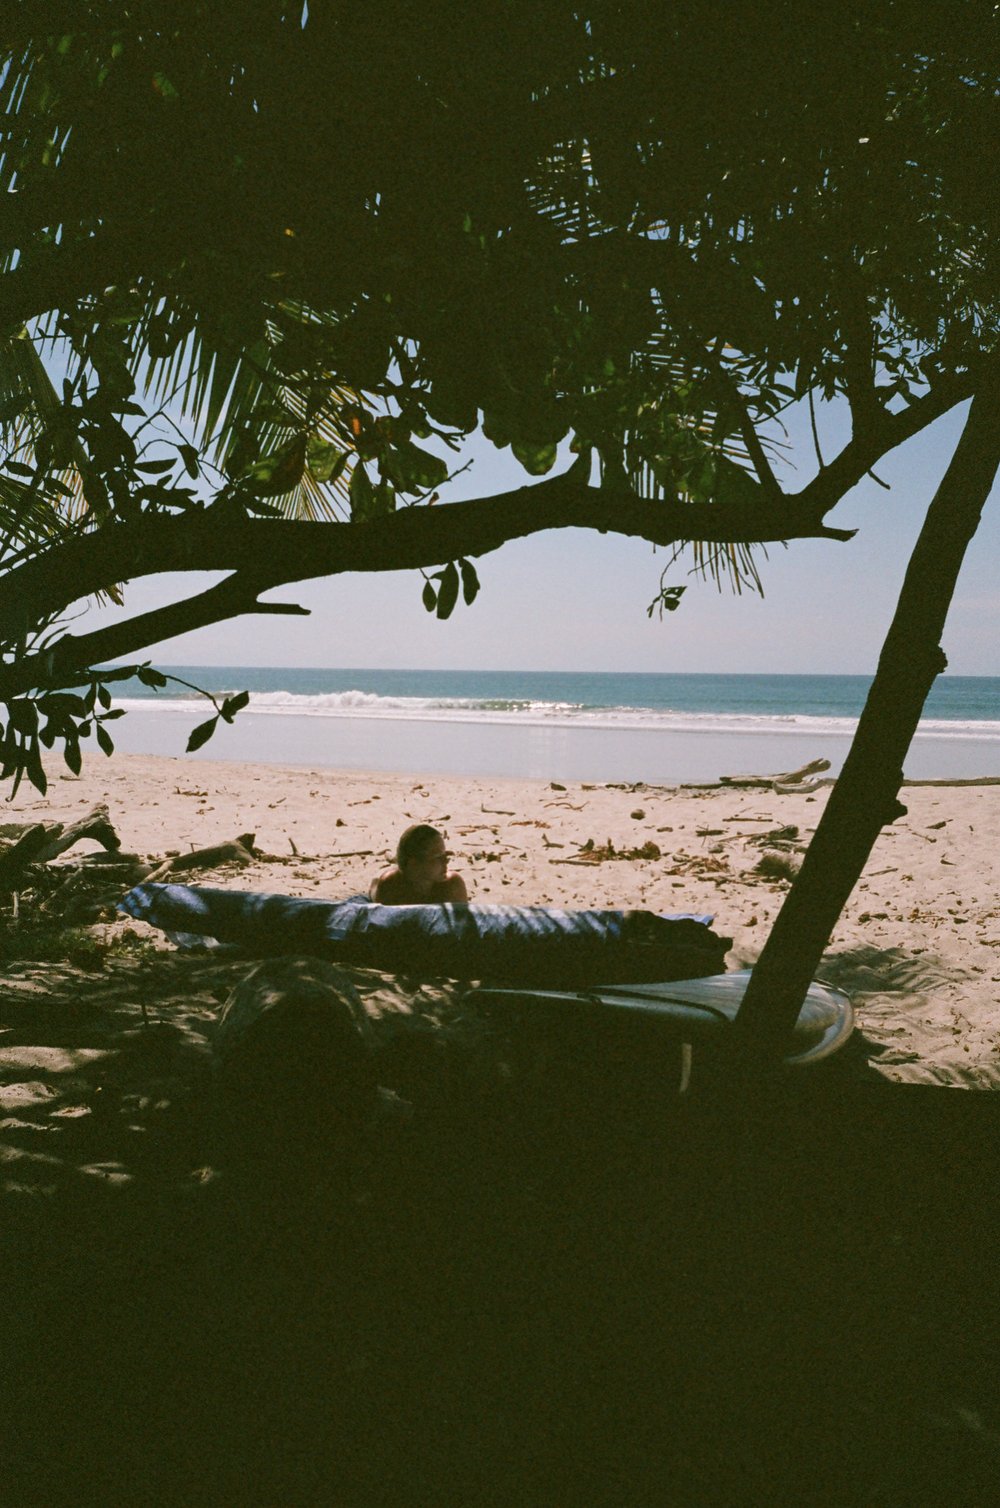 costa-rica-surfing-beach-surf-film-diaries-000975620006.jpg